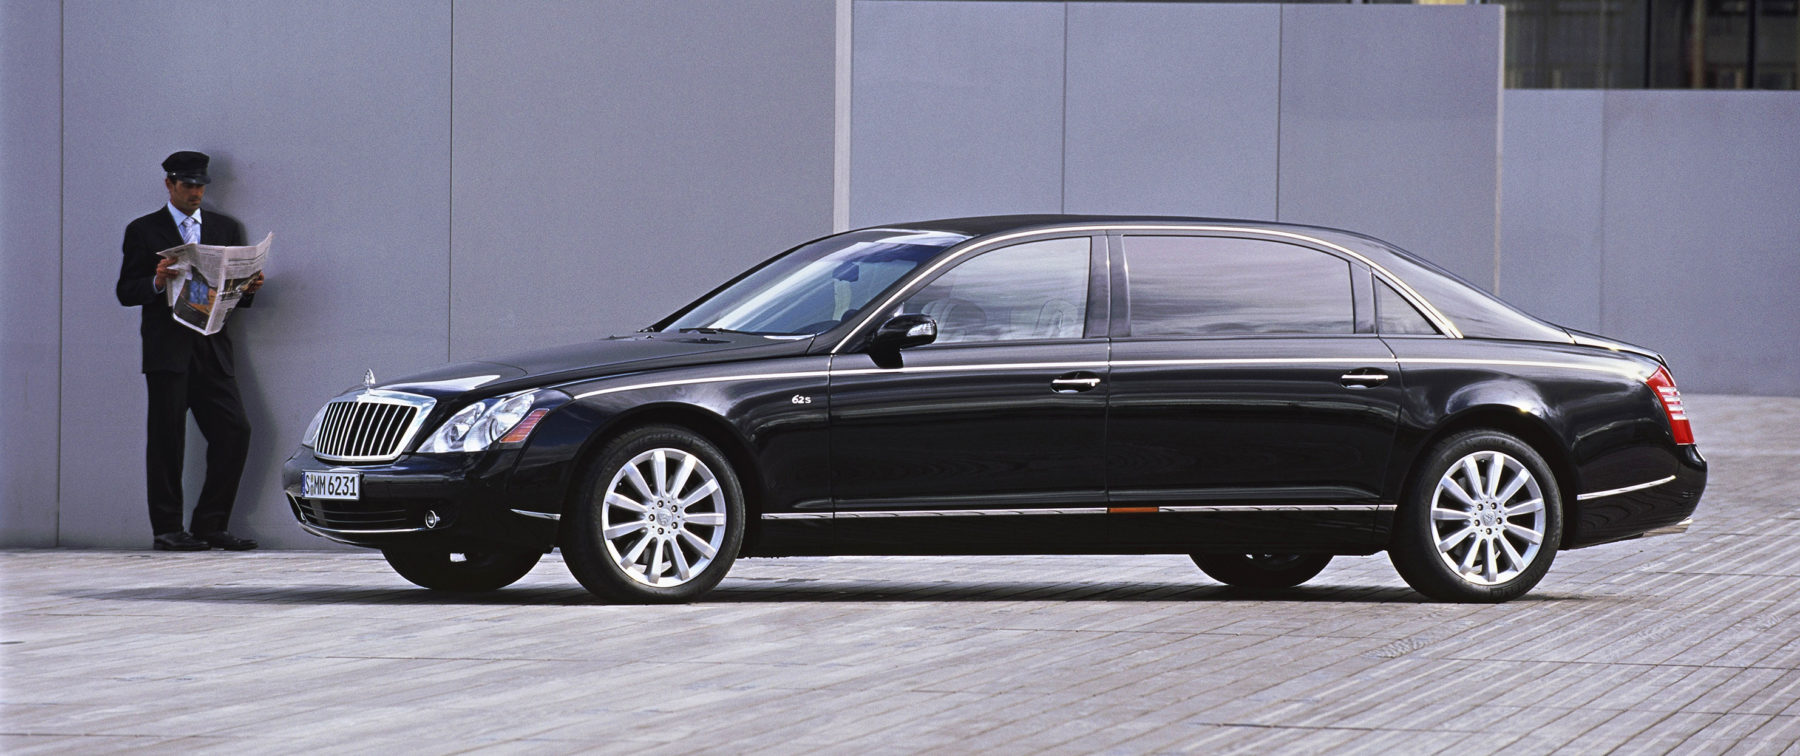 maybach-history-car-luxury-1-1800x756-c-center.jpg